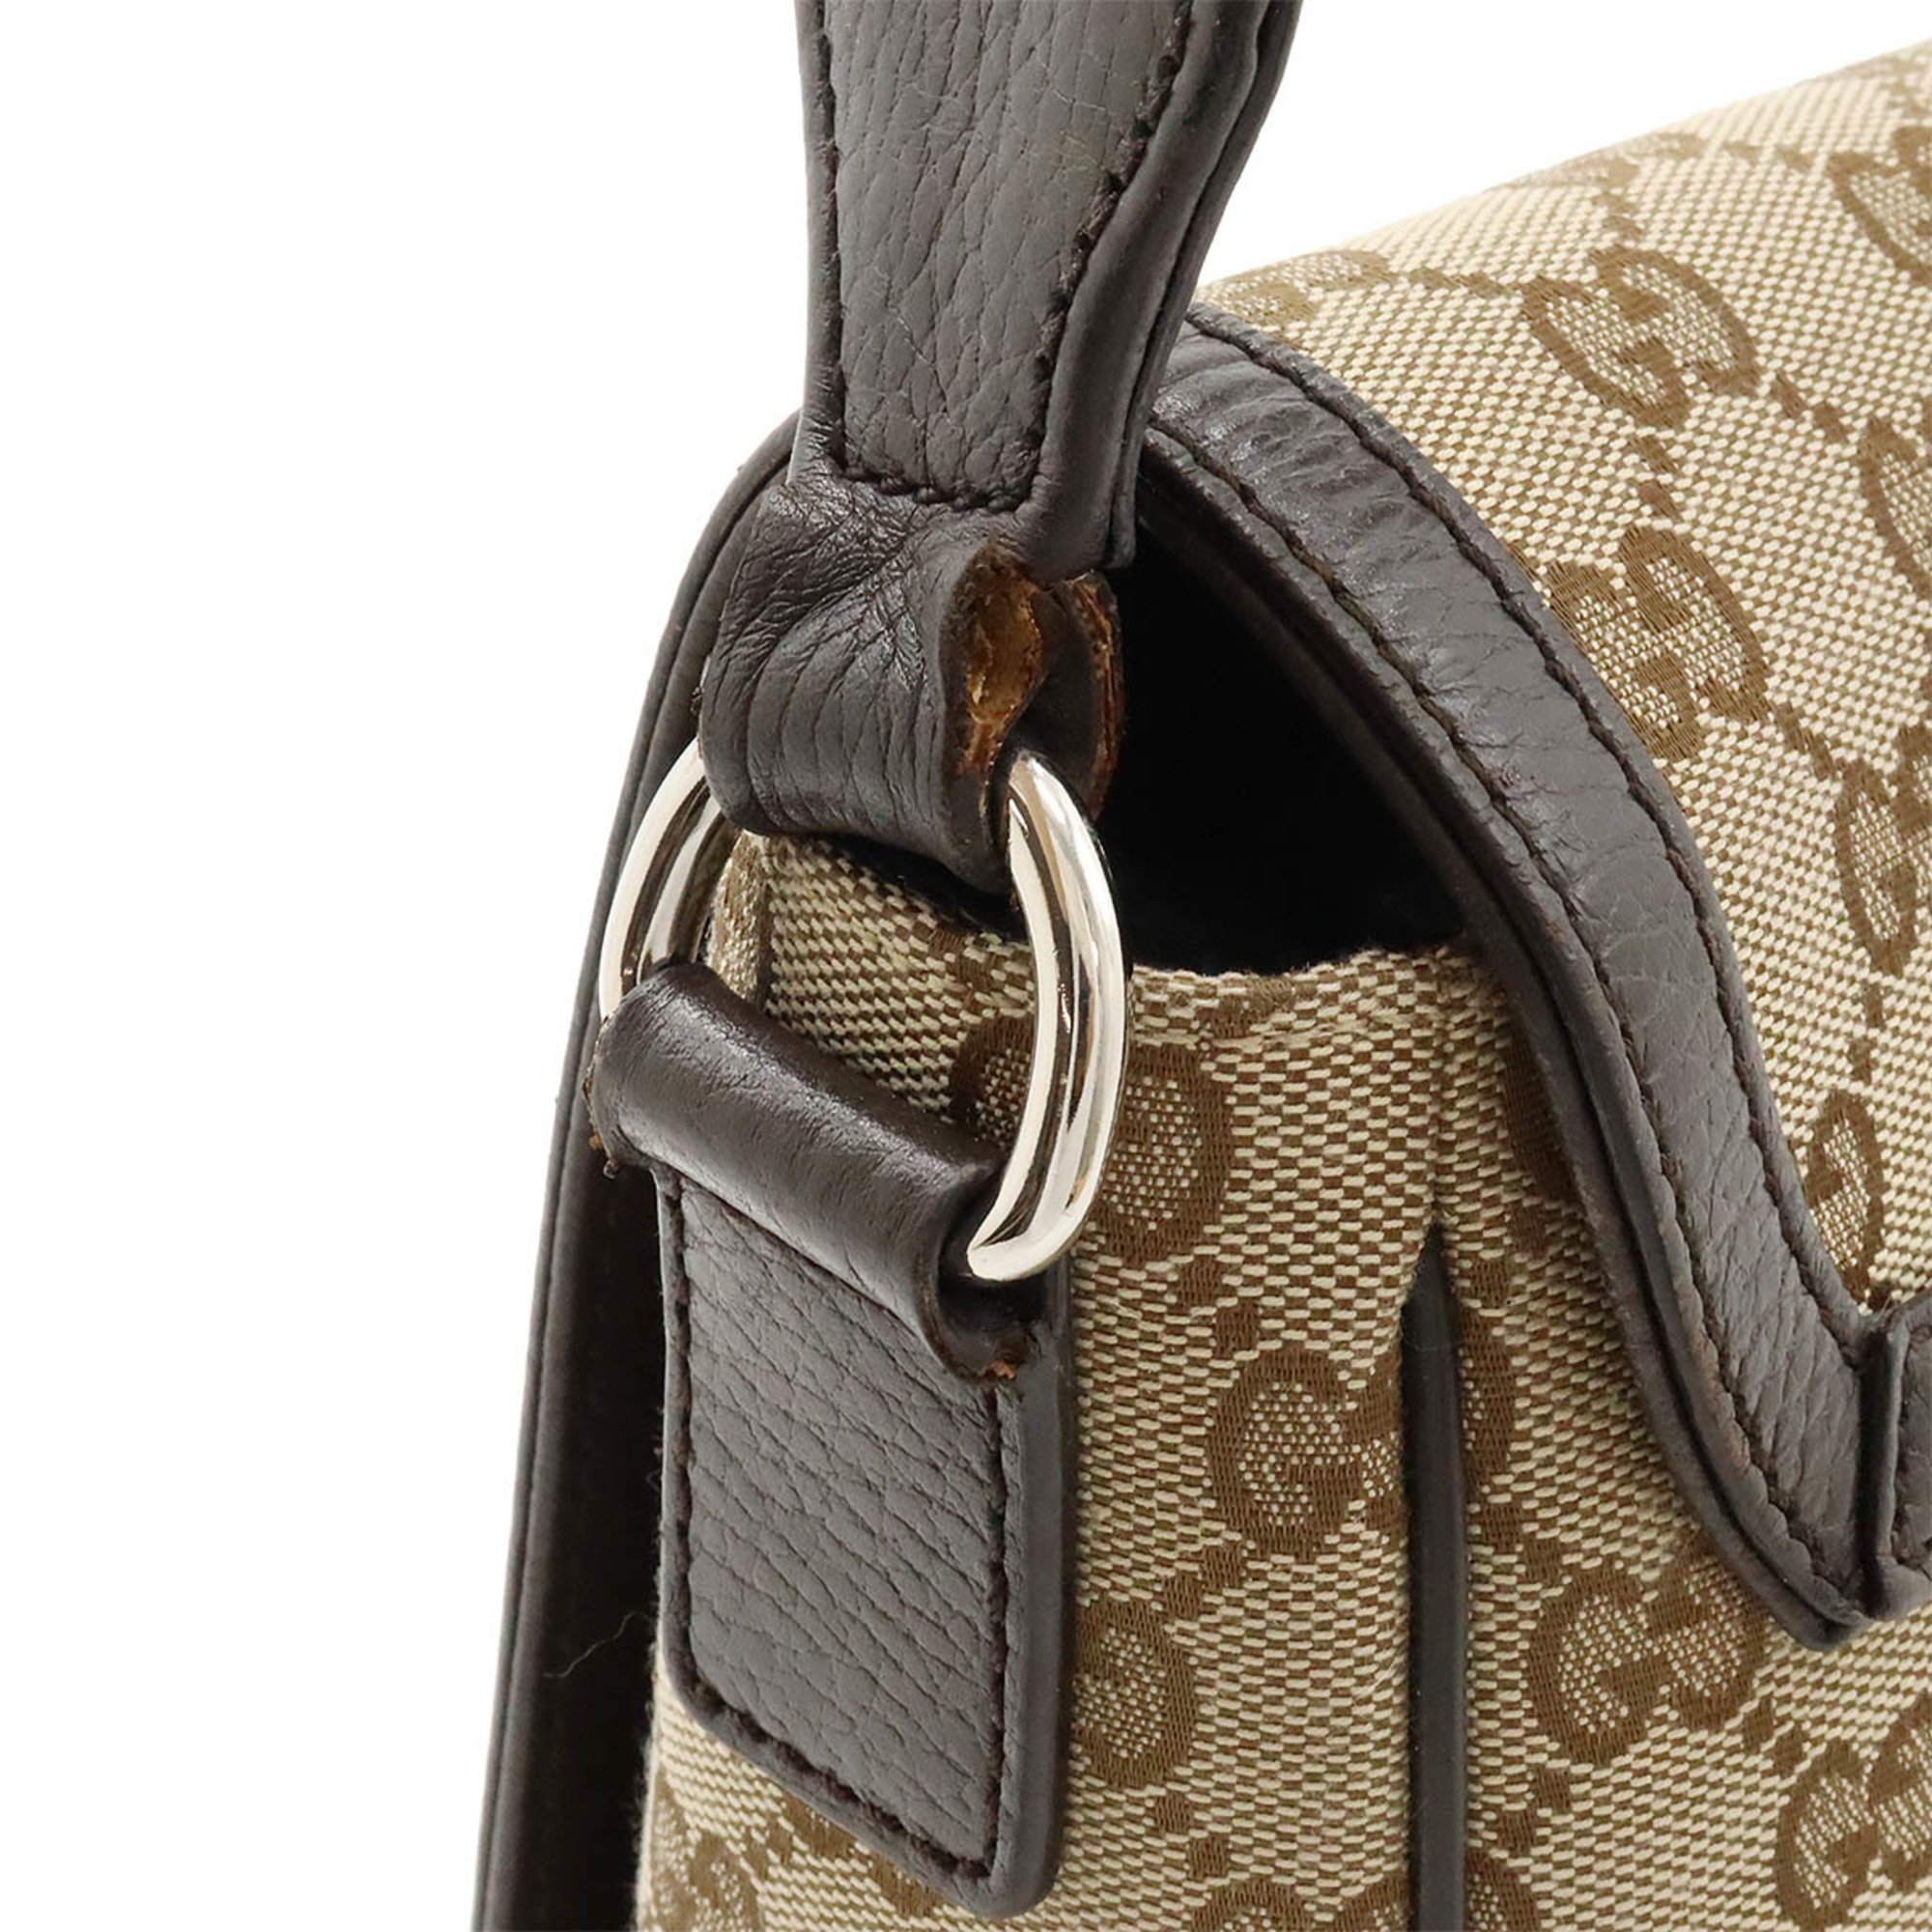 GUCCI GG canvas shoulder bag leather khaki beige dark brown 449172